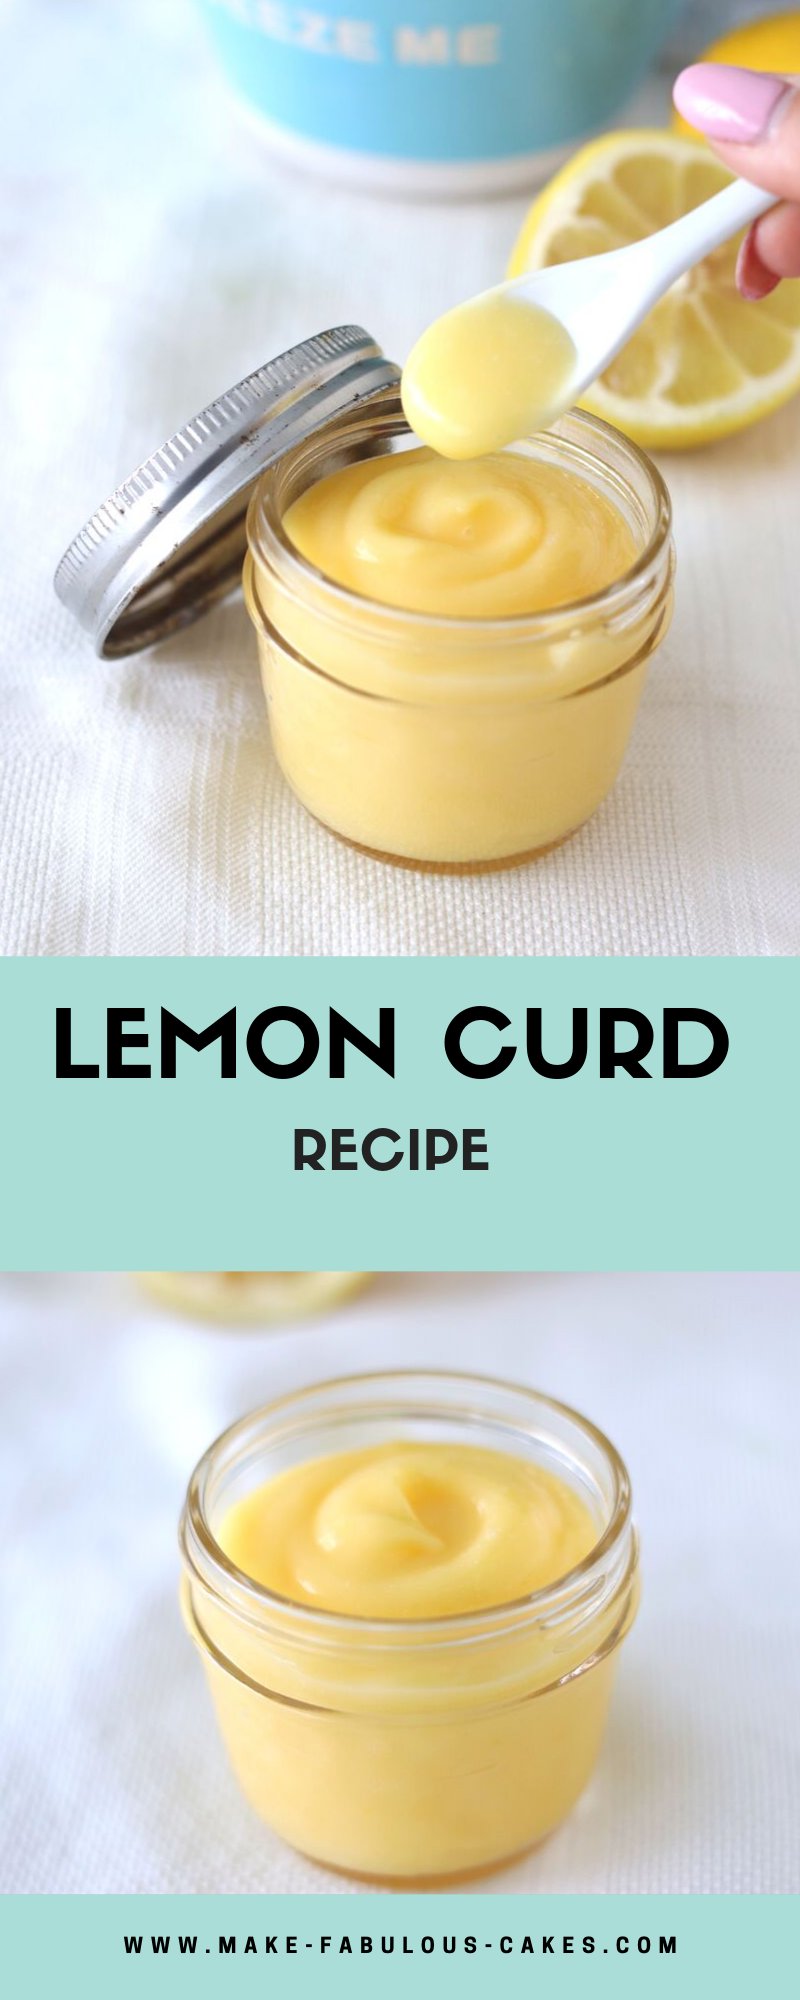 Lemon Curd recipe using whole eggs